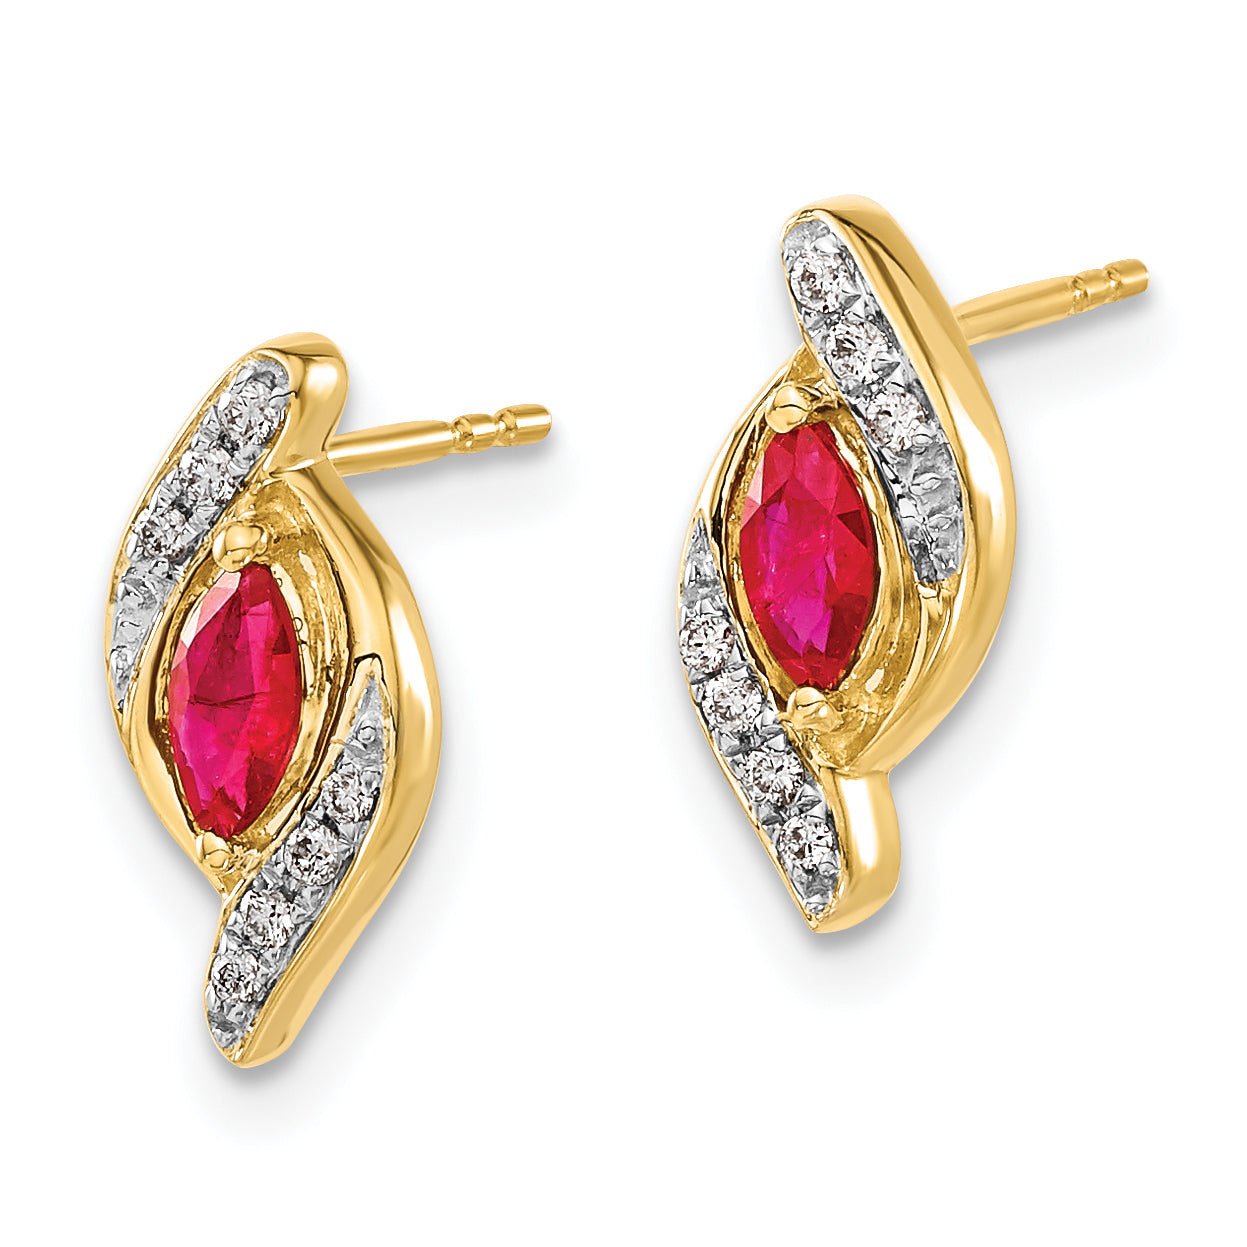 10k Diamond and Ruby Earrings